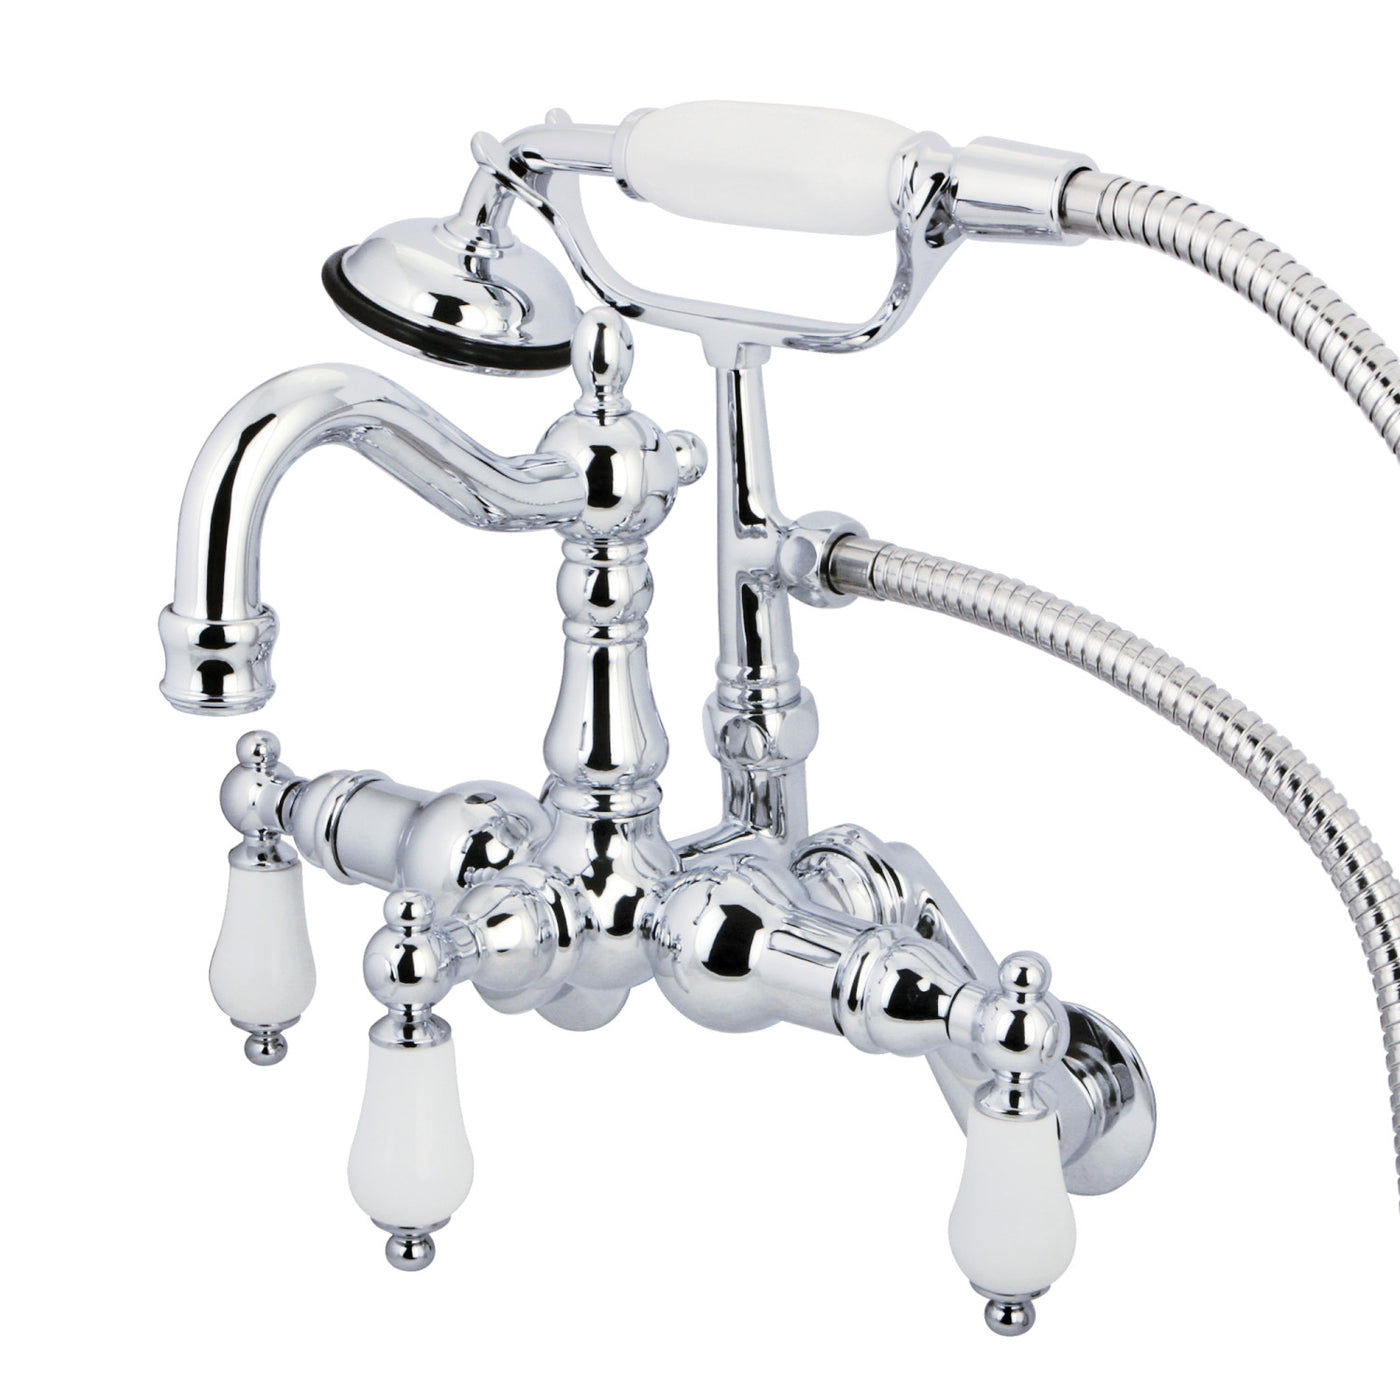 Elements of Design DT13021PL Adjustable Center Wall Mount Tub Faucet with Hand Shower, Polished Chrome